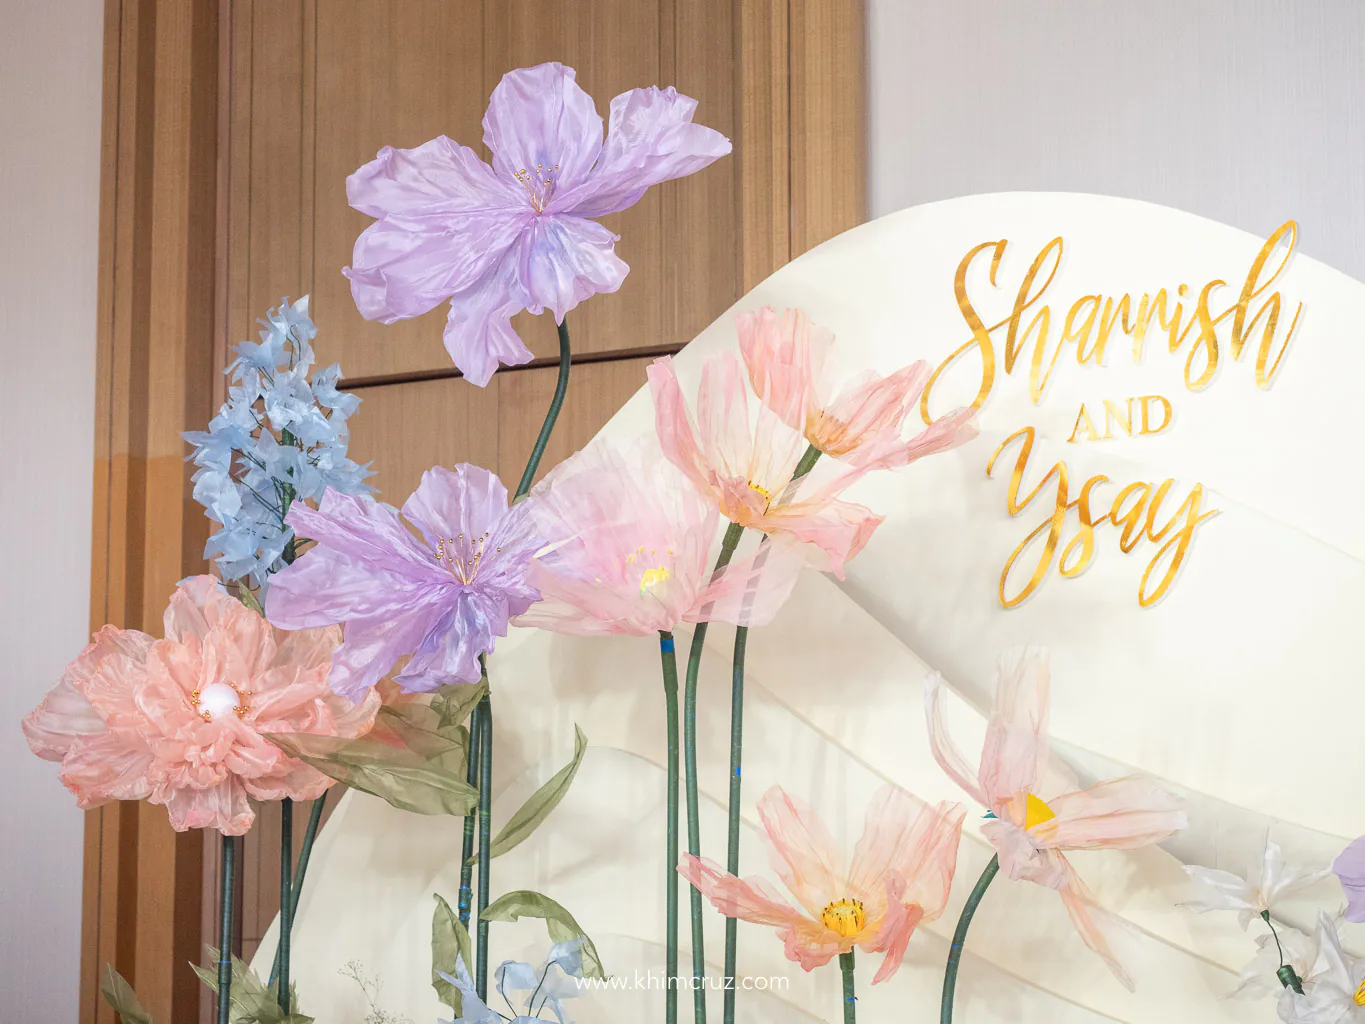 dreamy floral garden theme photo backdrop designed details by Khim Cruz